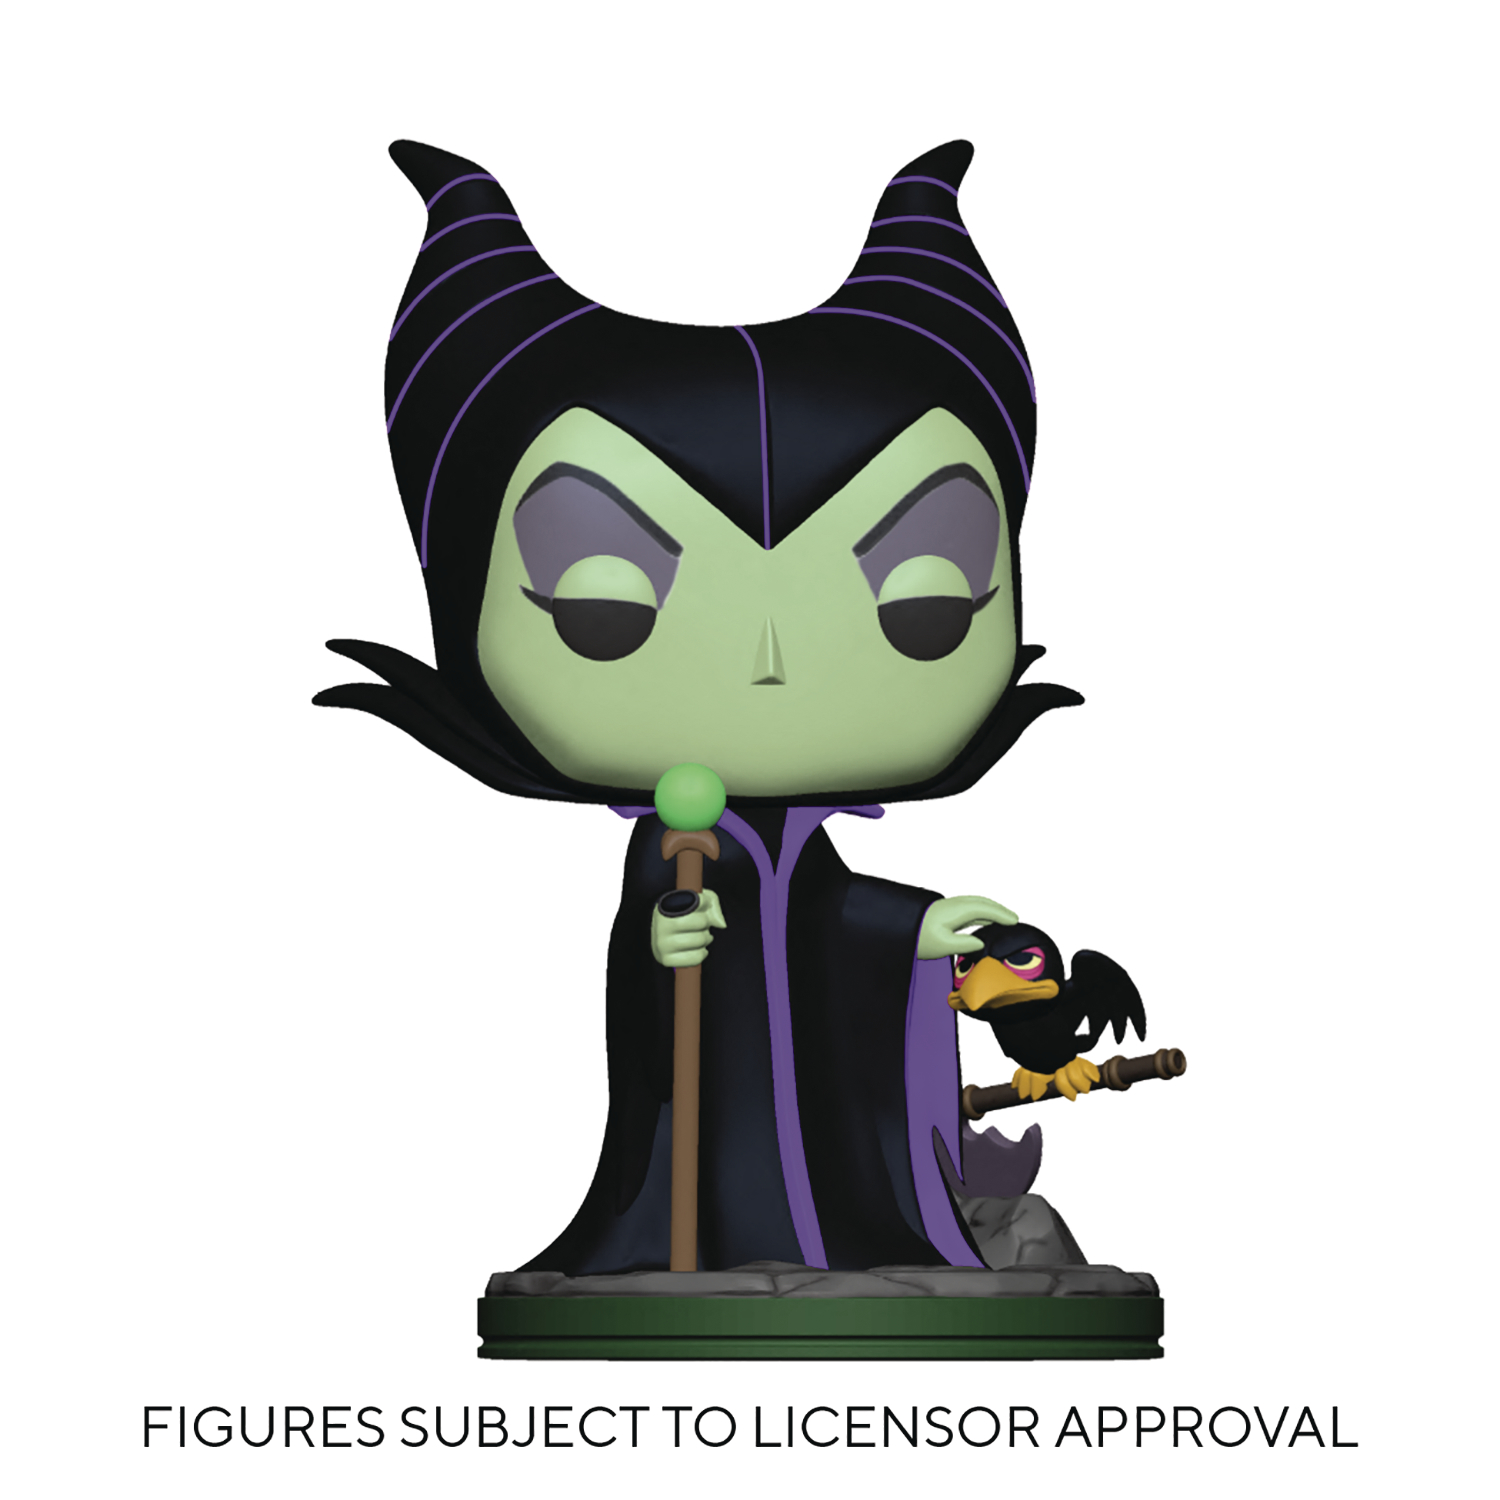 Pop Disney Villains Maleficent Vinyl Figure